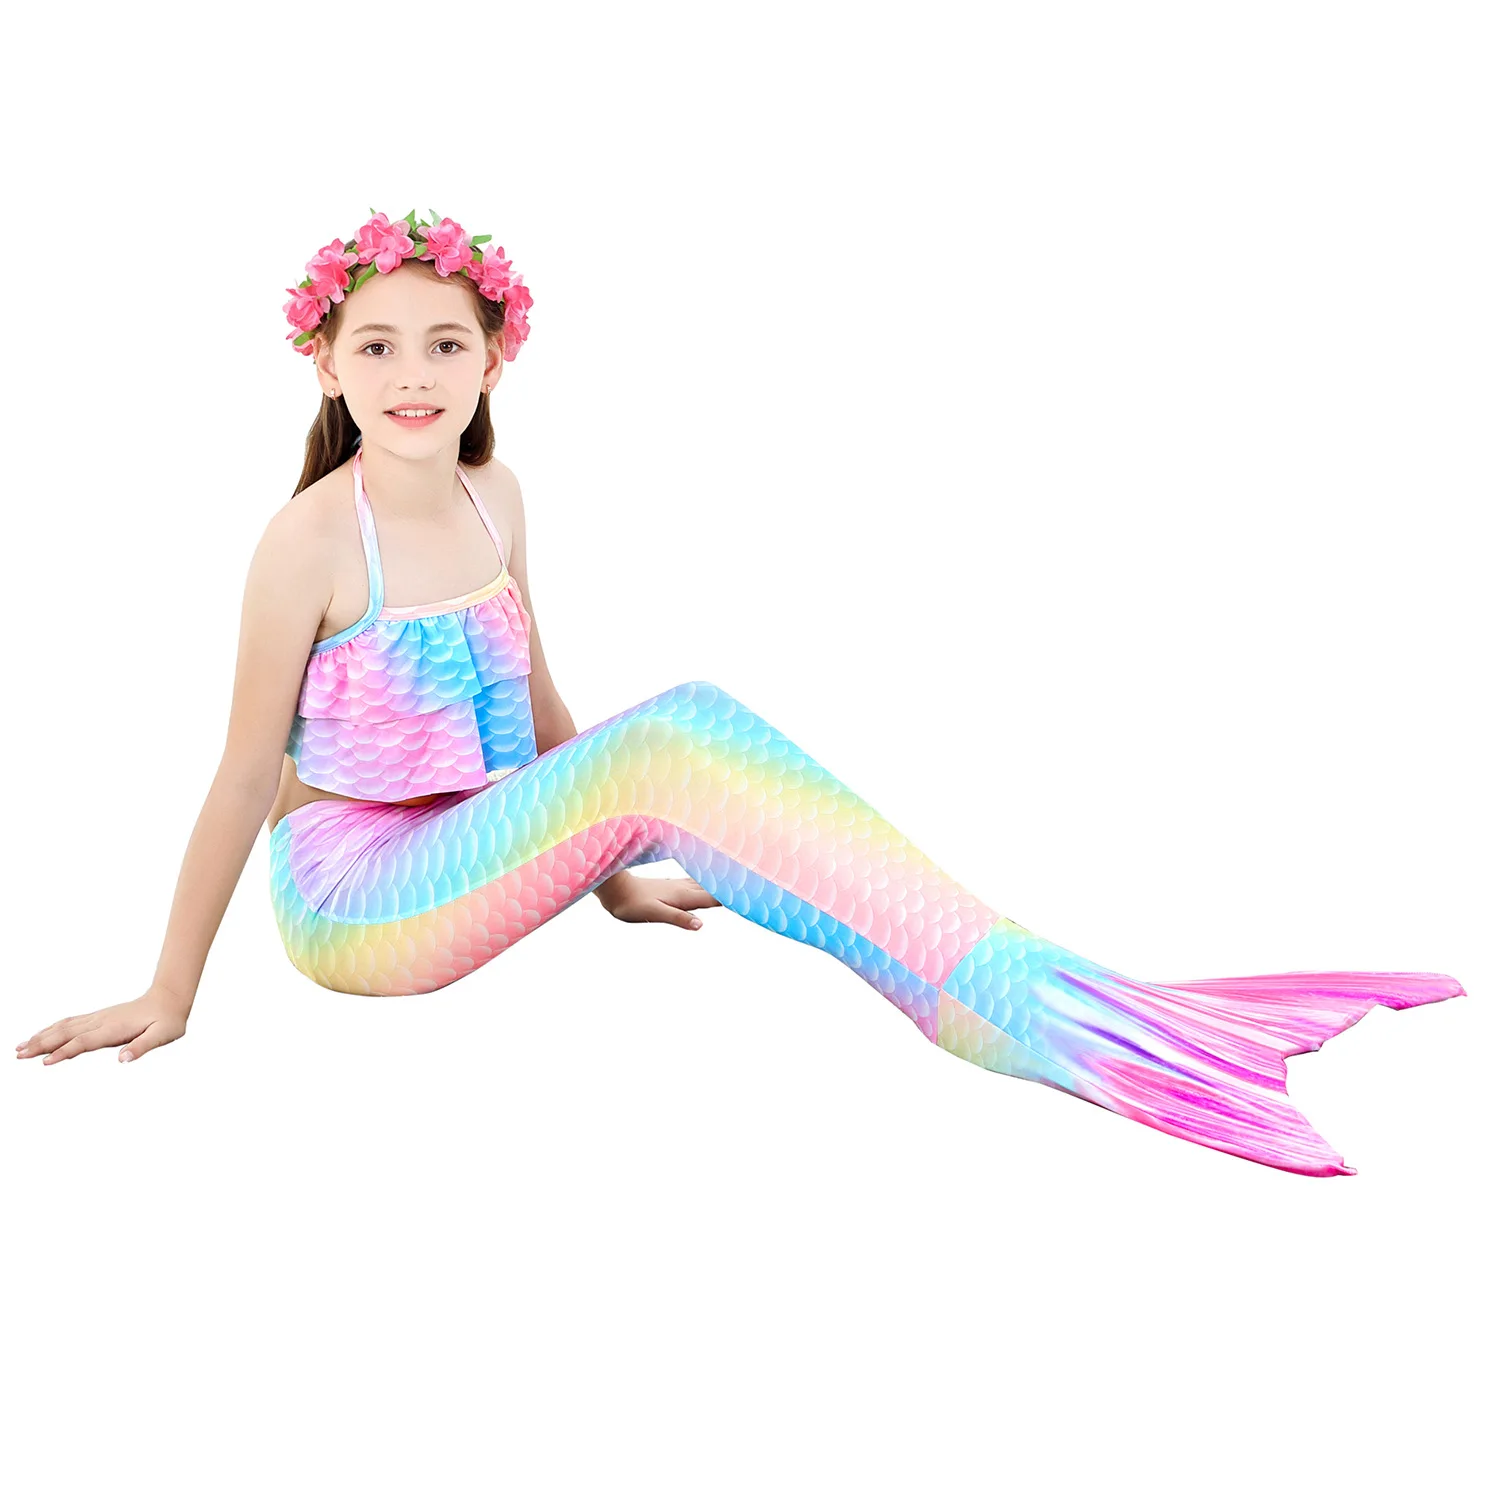 Dresses 2021 Mermaid Tail With Monofin Flipper Mermaid Costume Cosplay Mermaid Bikini Swimsuit Girls Dress Girls Costumes Aliexpress - roblox mermaid tail